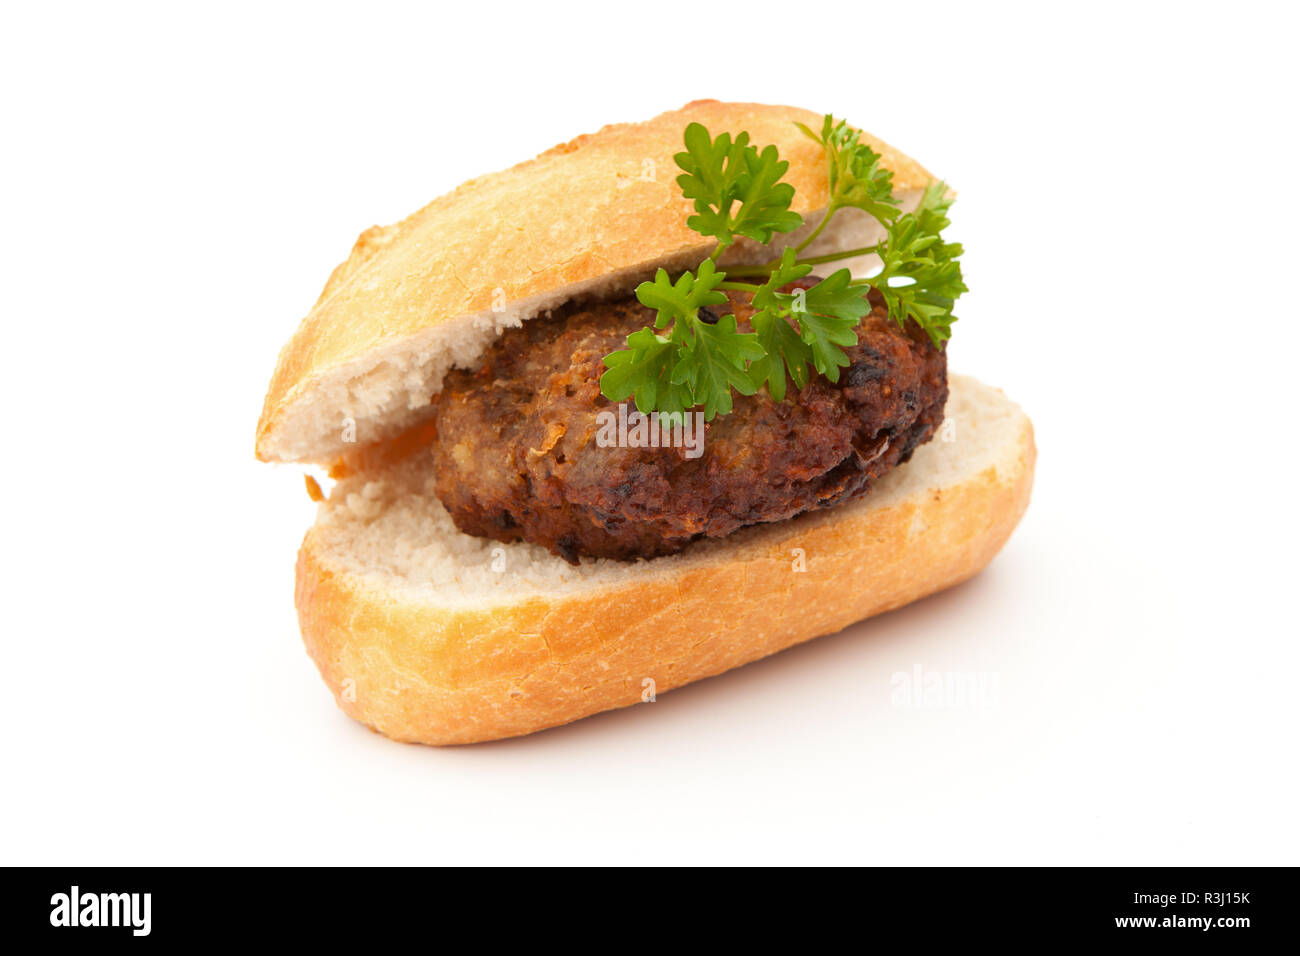 meatball - meatball,bread and parsley Stock Photo